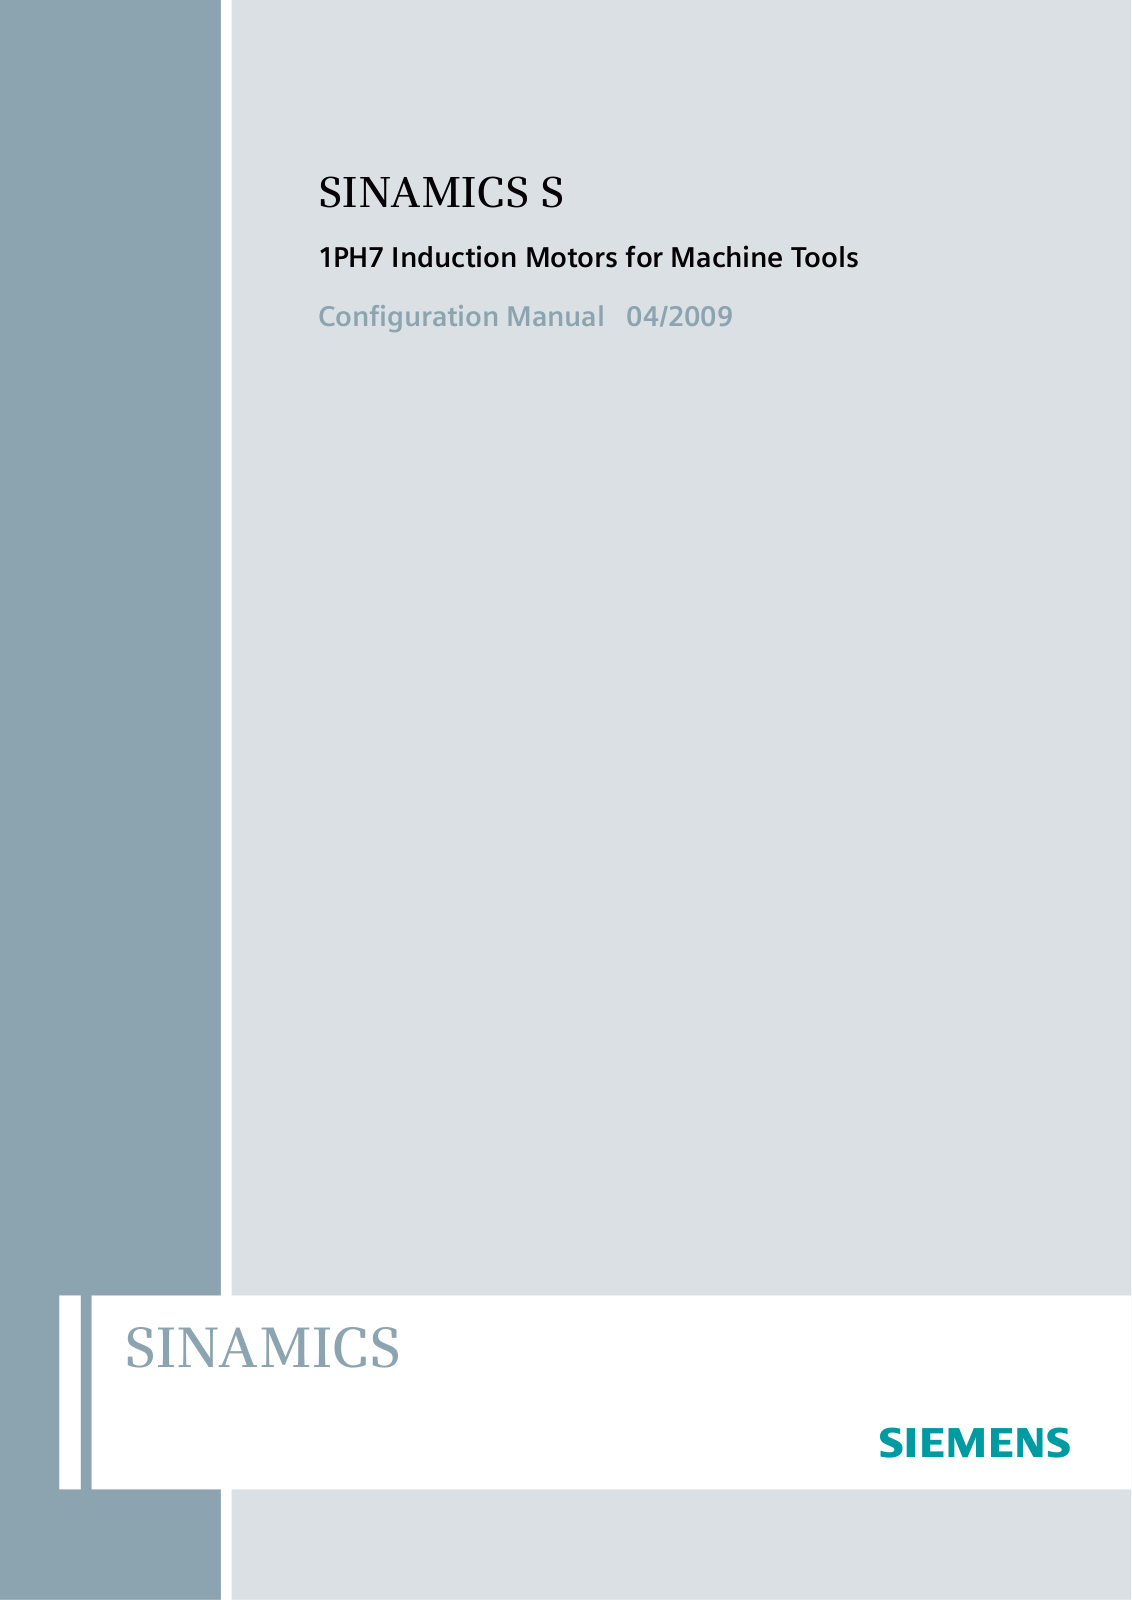 Siemens SINAMICS Configuration Manual